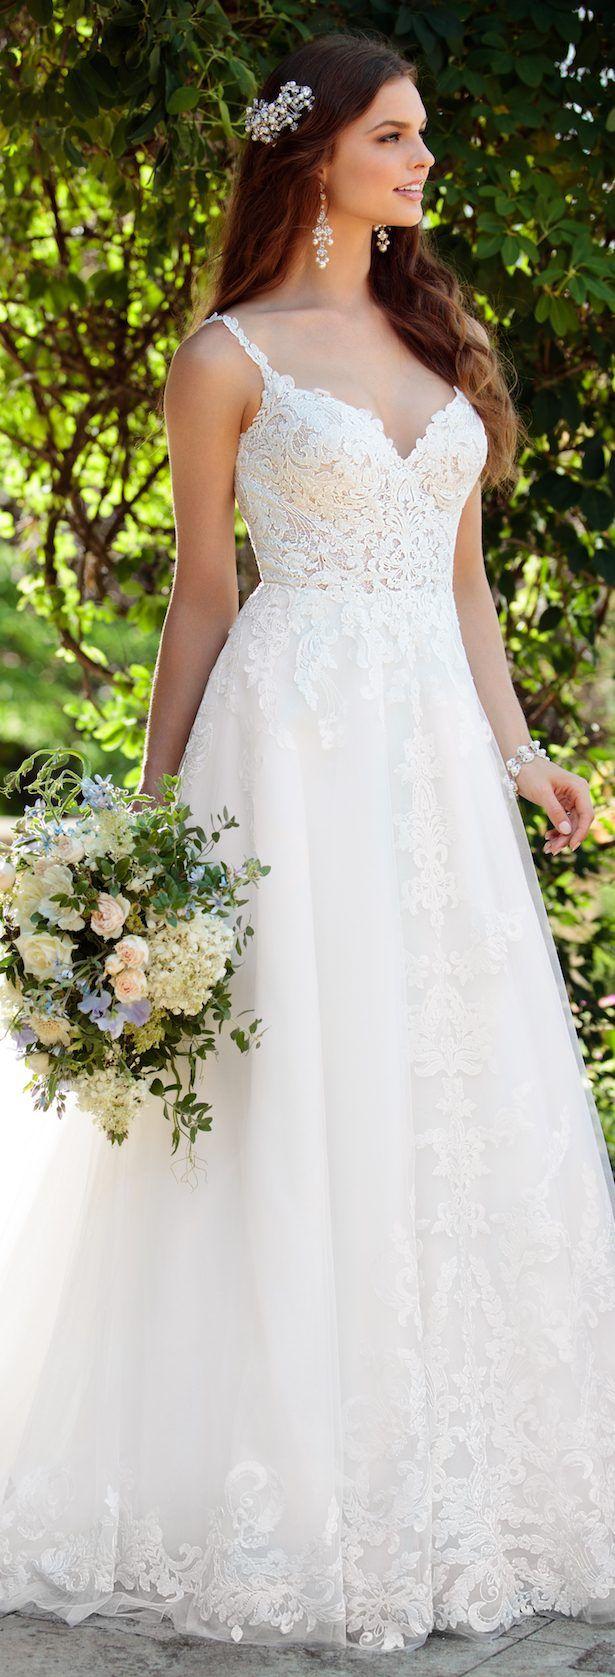 Wedding - Wedding Dress By Essense Of Australia Spring 2017 Bridal Collection